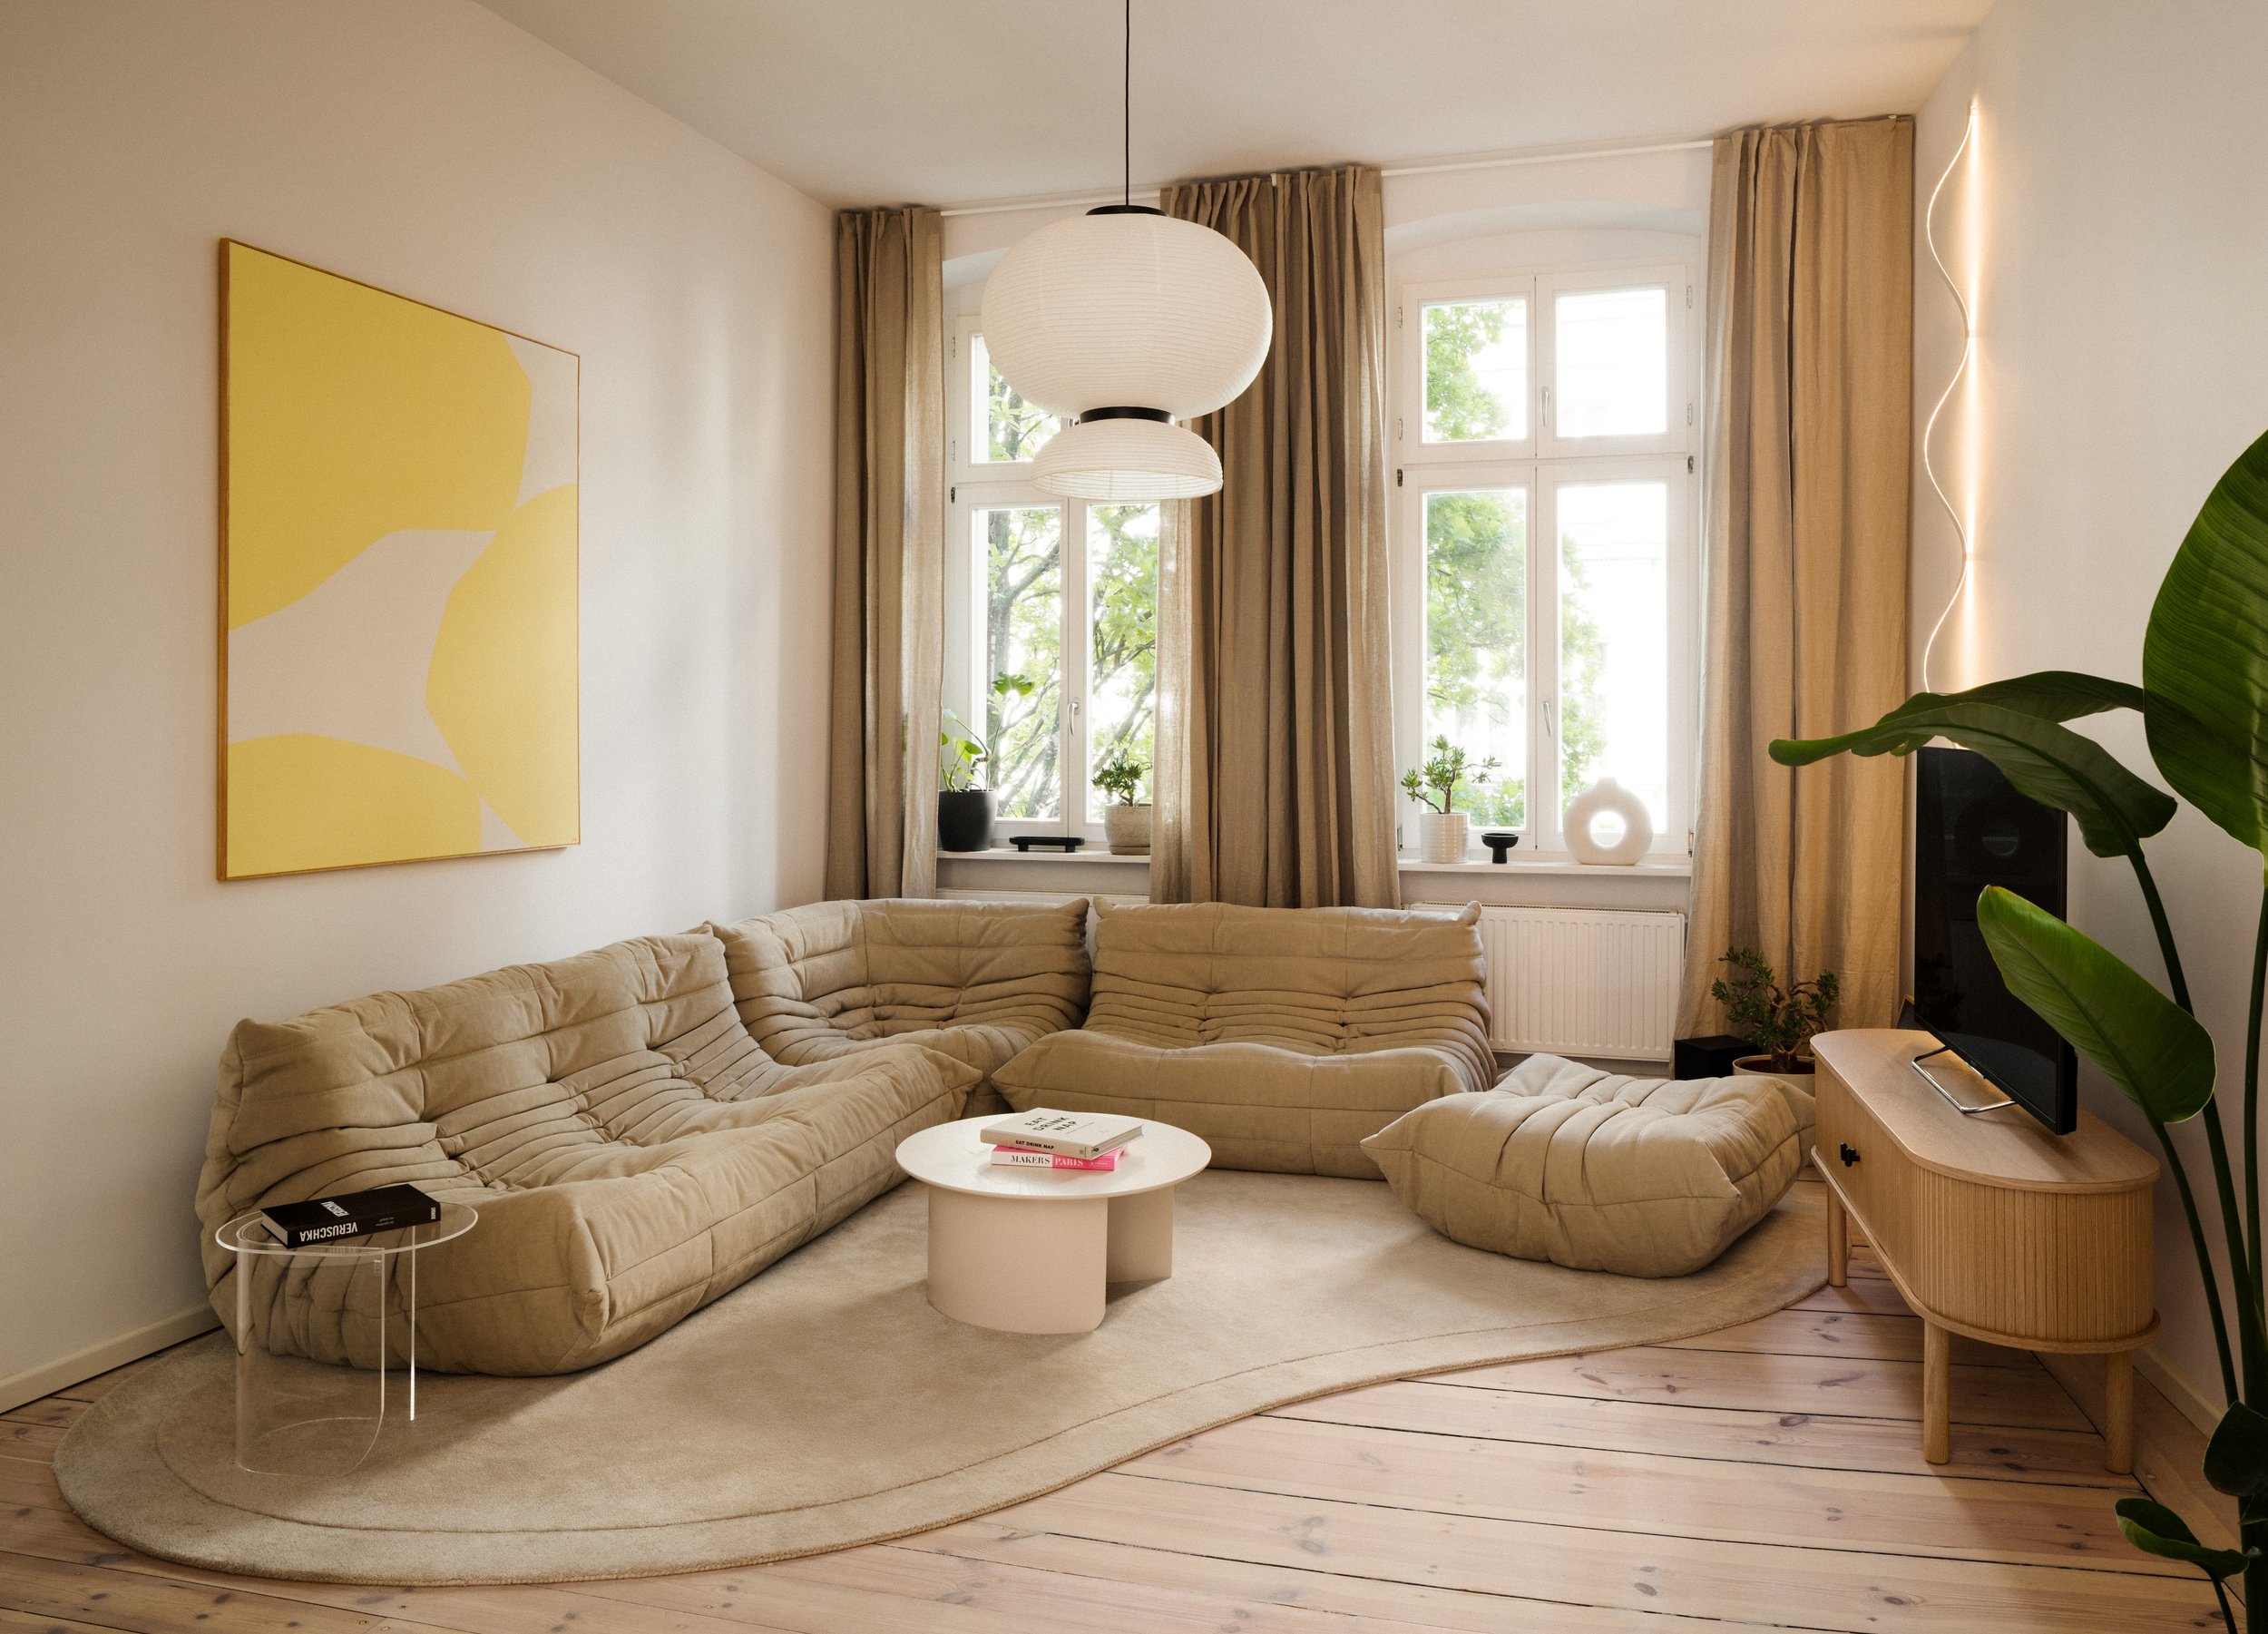 Britta's Wohnung_Living Room_1.jpg